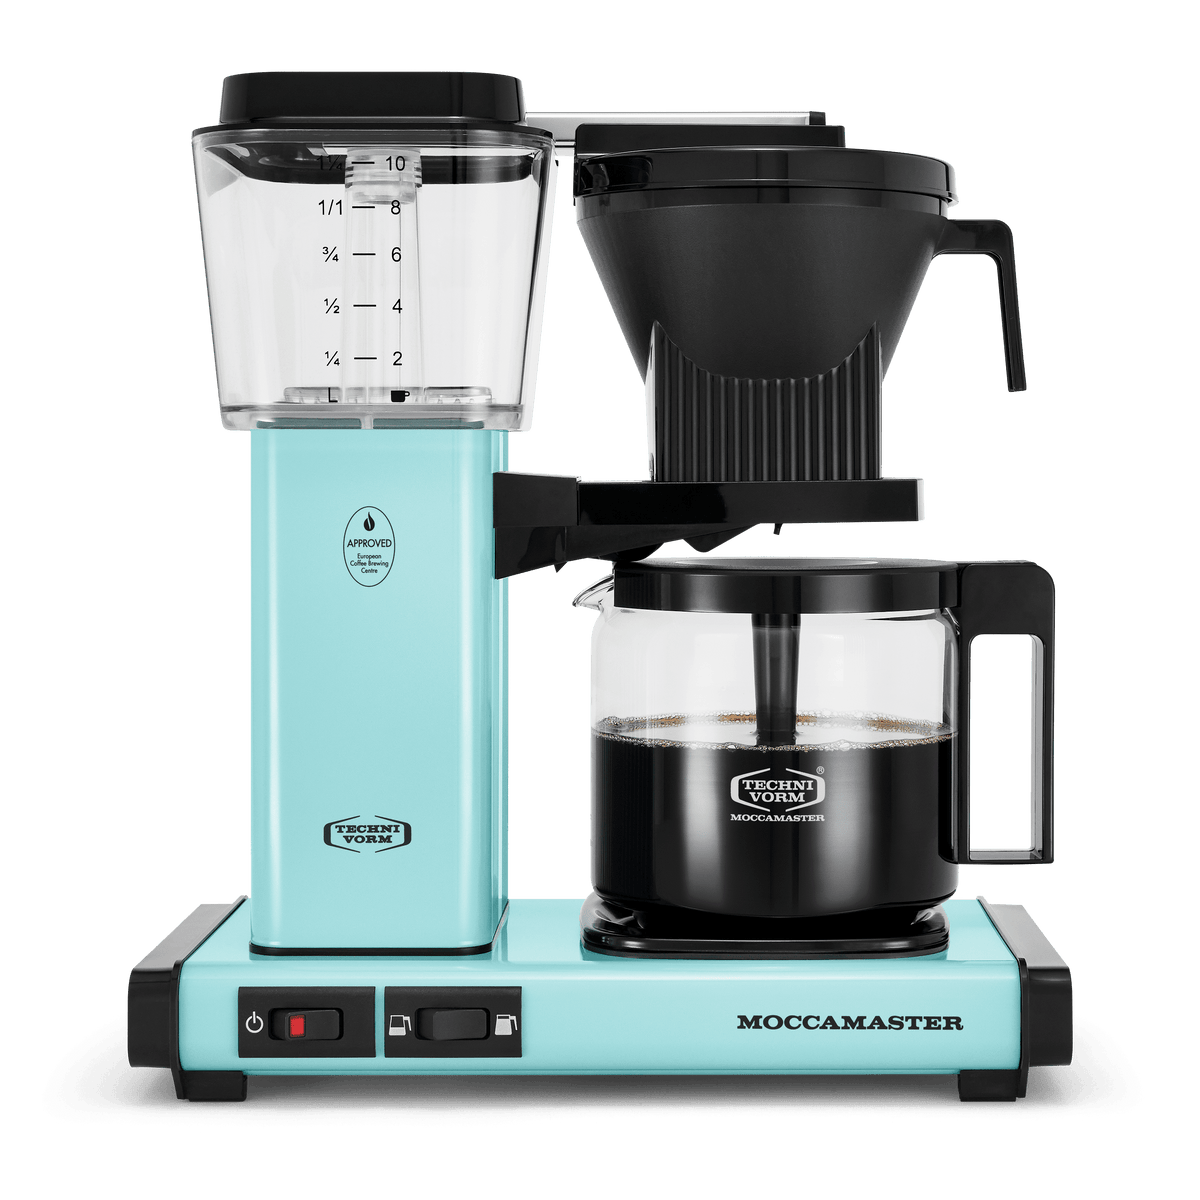 Automatic Coffee Machine: Moccamaster - Coffee USA Moccamaster KBGV Select Maker